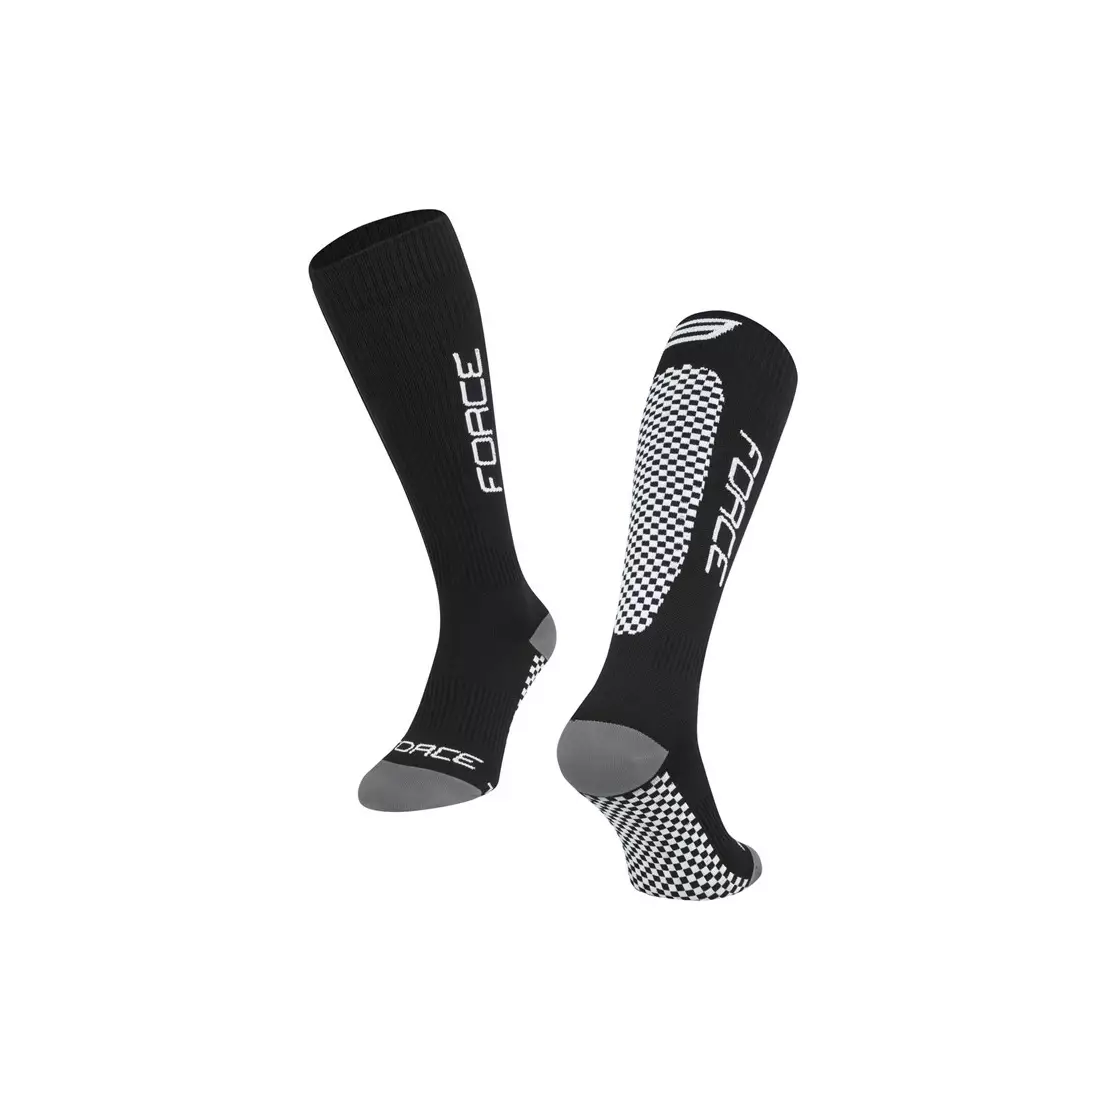 FORCE TESSERA COMPRESSION compression socks, black and gray